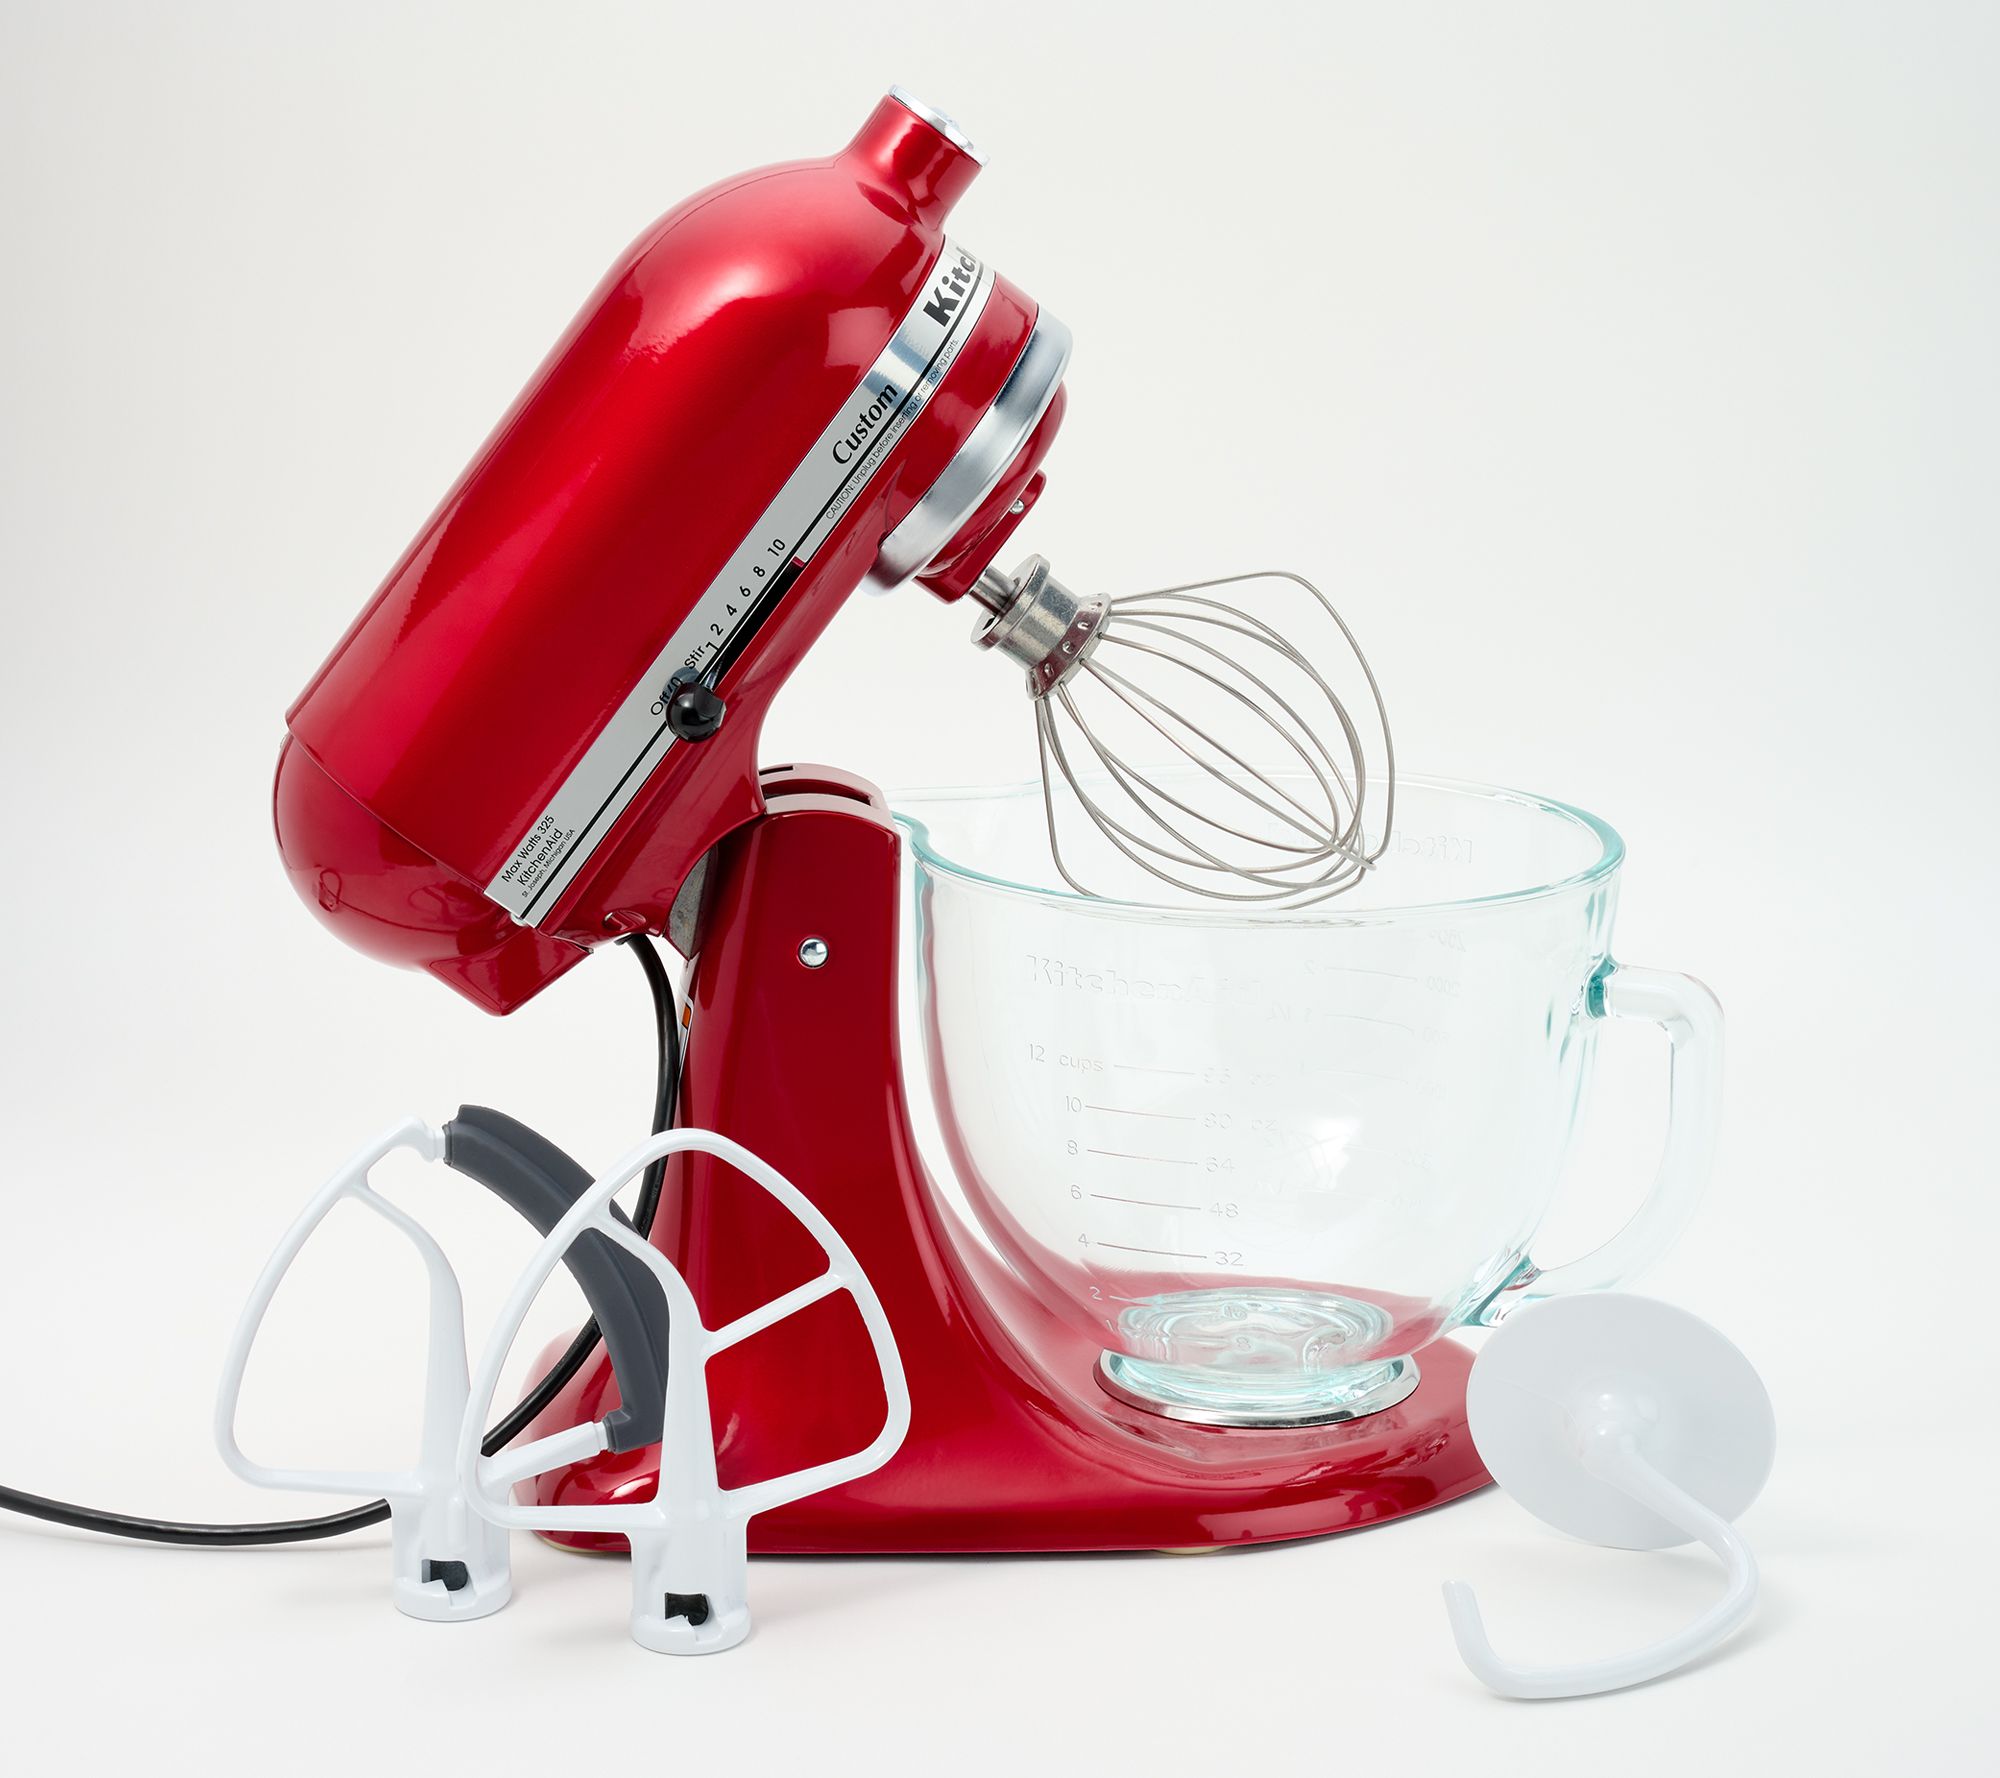 KitchenAid Mixer Artisan 5 Quart Capacity Glass Bowl Mixer - Candy Apple Red